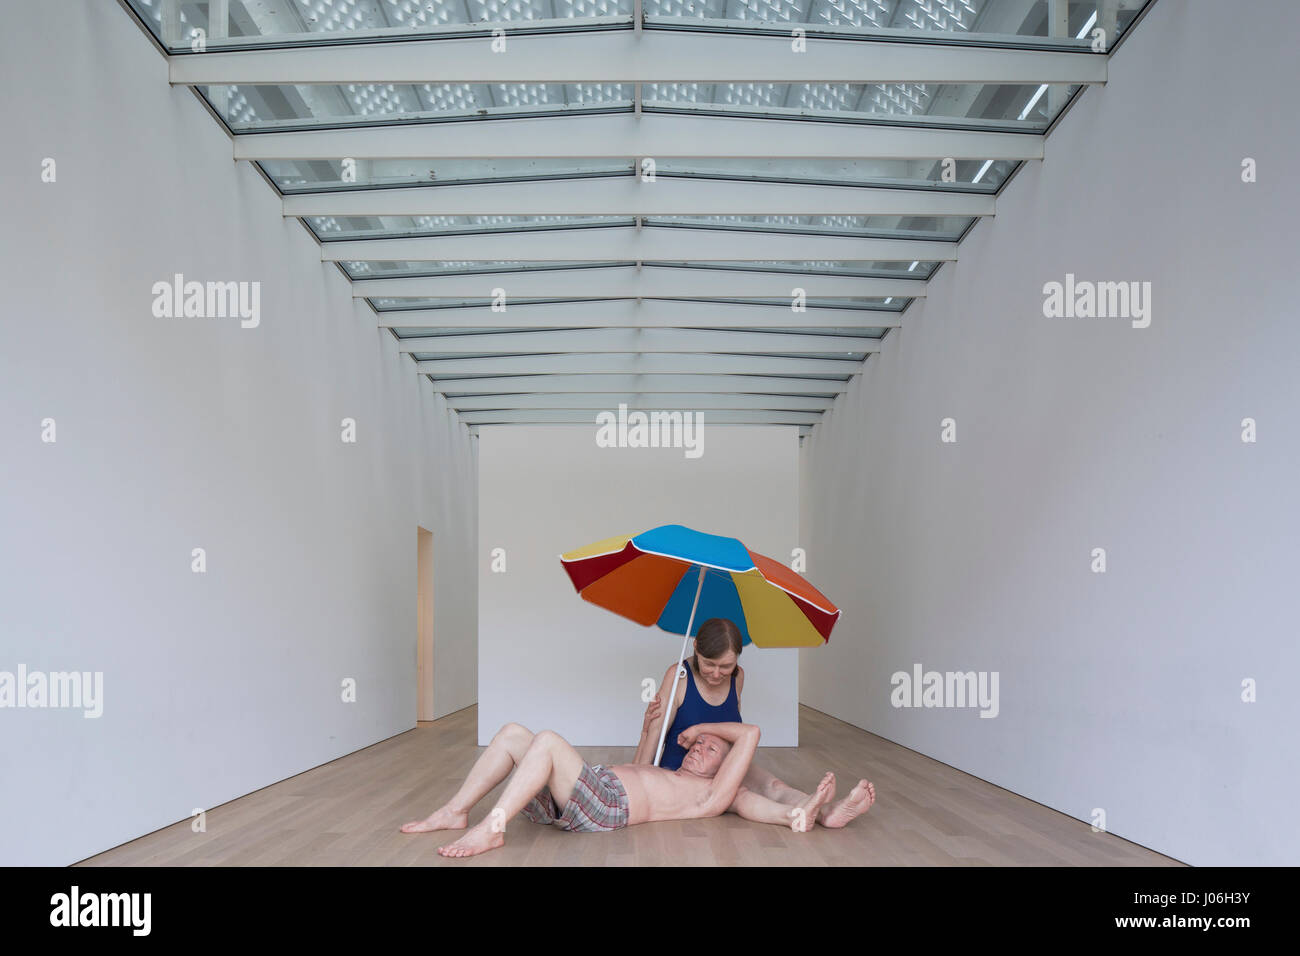 View through exhibtion space with Ron Mueck artwork 'Couple Under an Umbrella'. Museum Voorlinden, Wassenaar, Netherlands. Architect: kraaijvanger arc Stock Photo